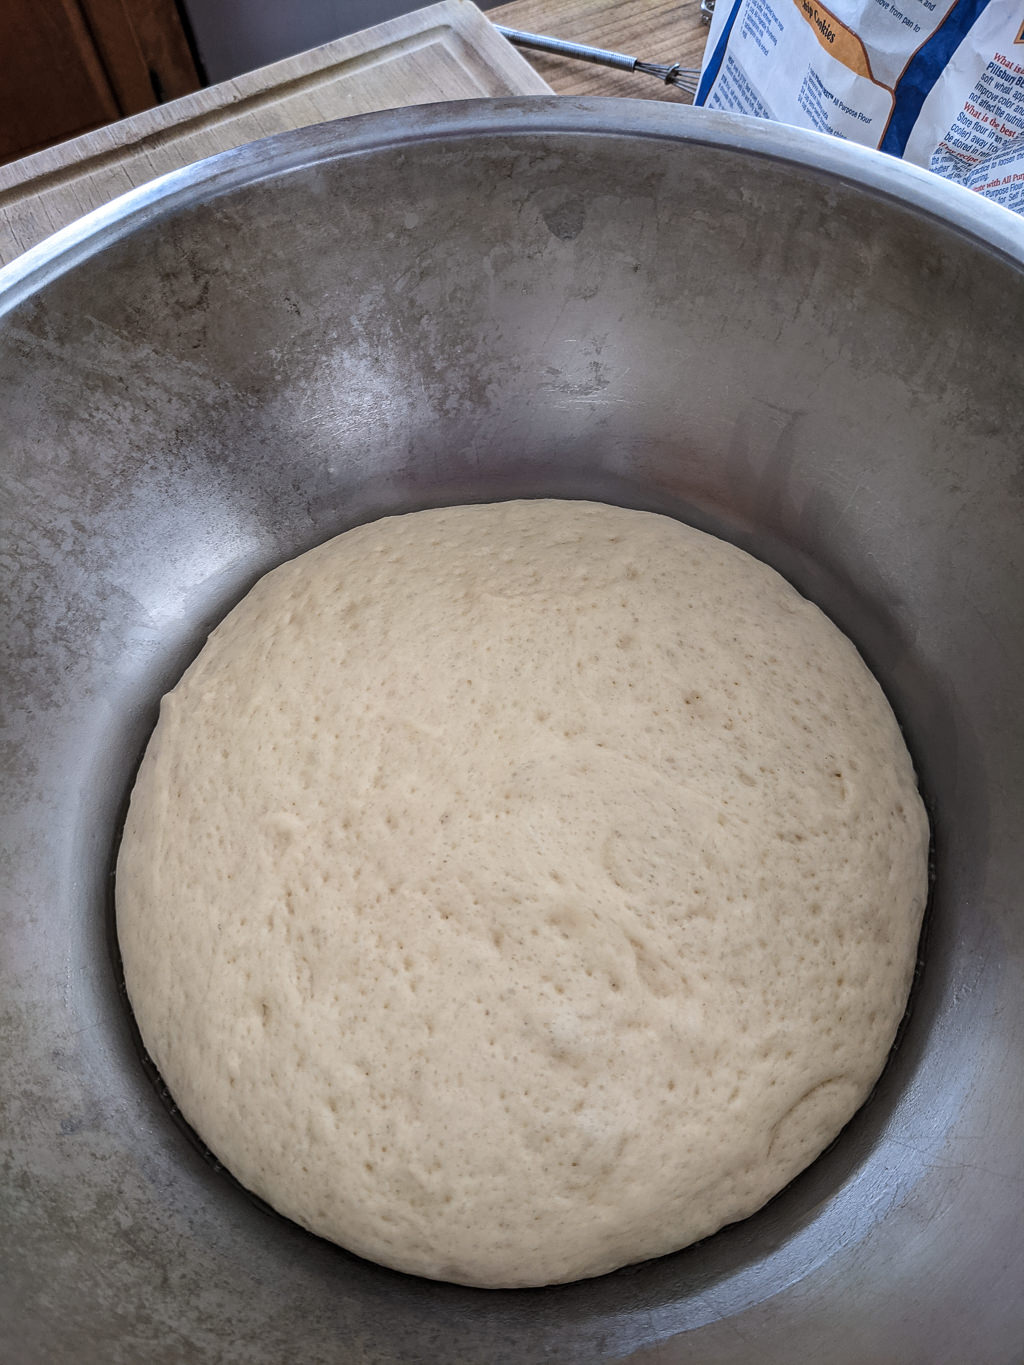 King cake dough in a bowl